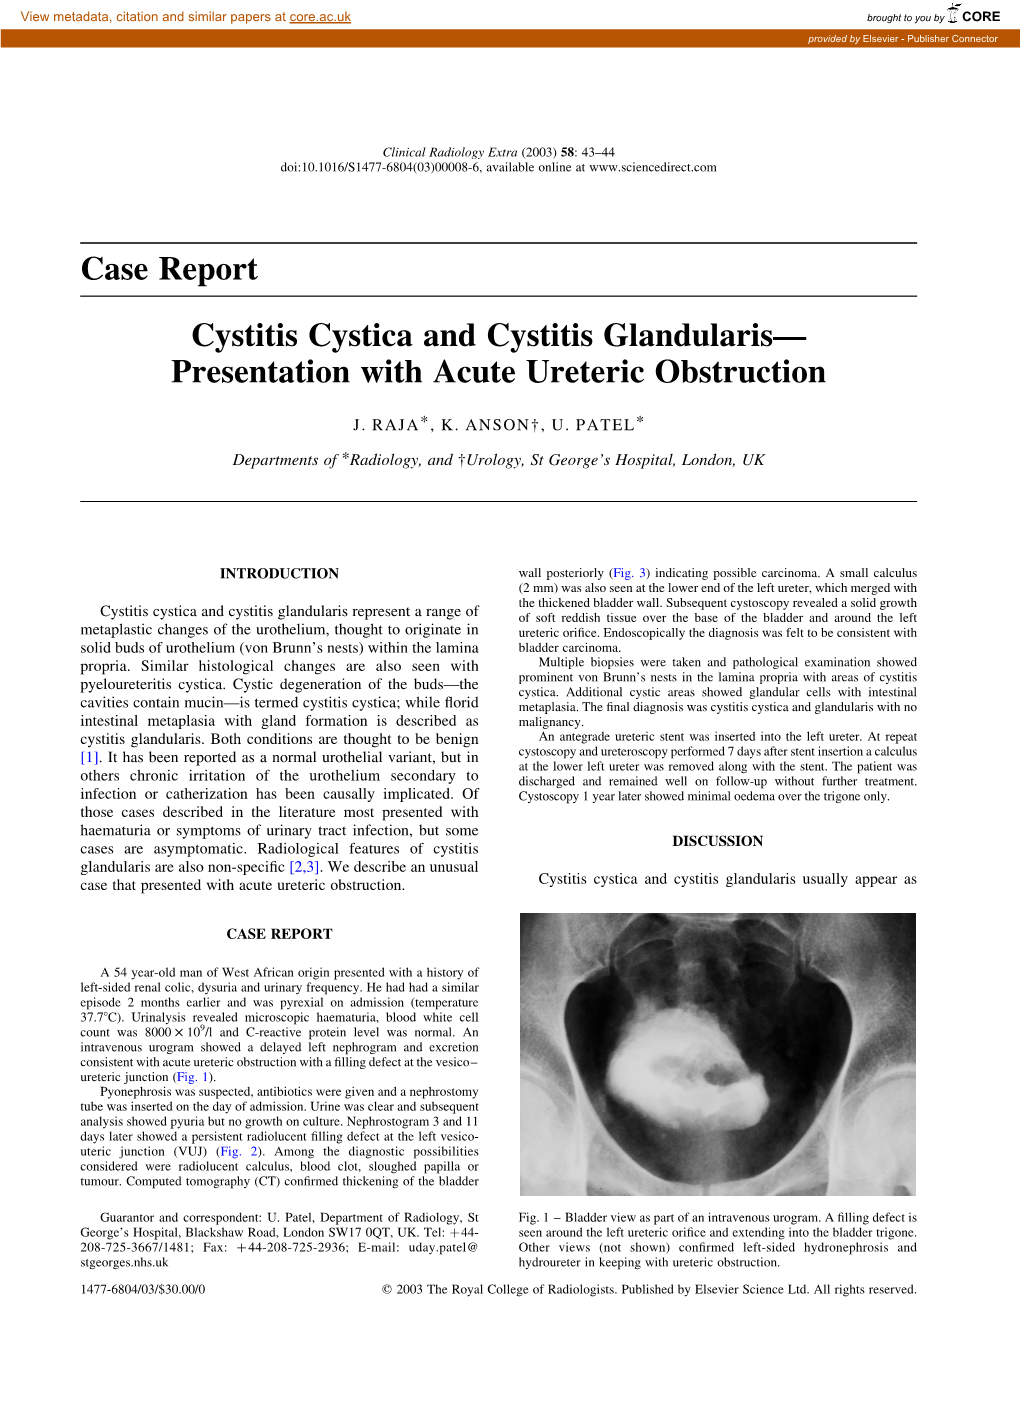 Case Report Cystitis Cystica and Cystitis Glandularis